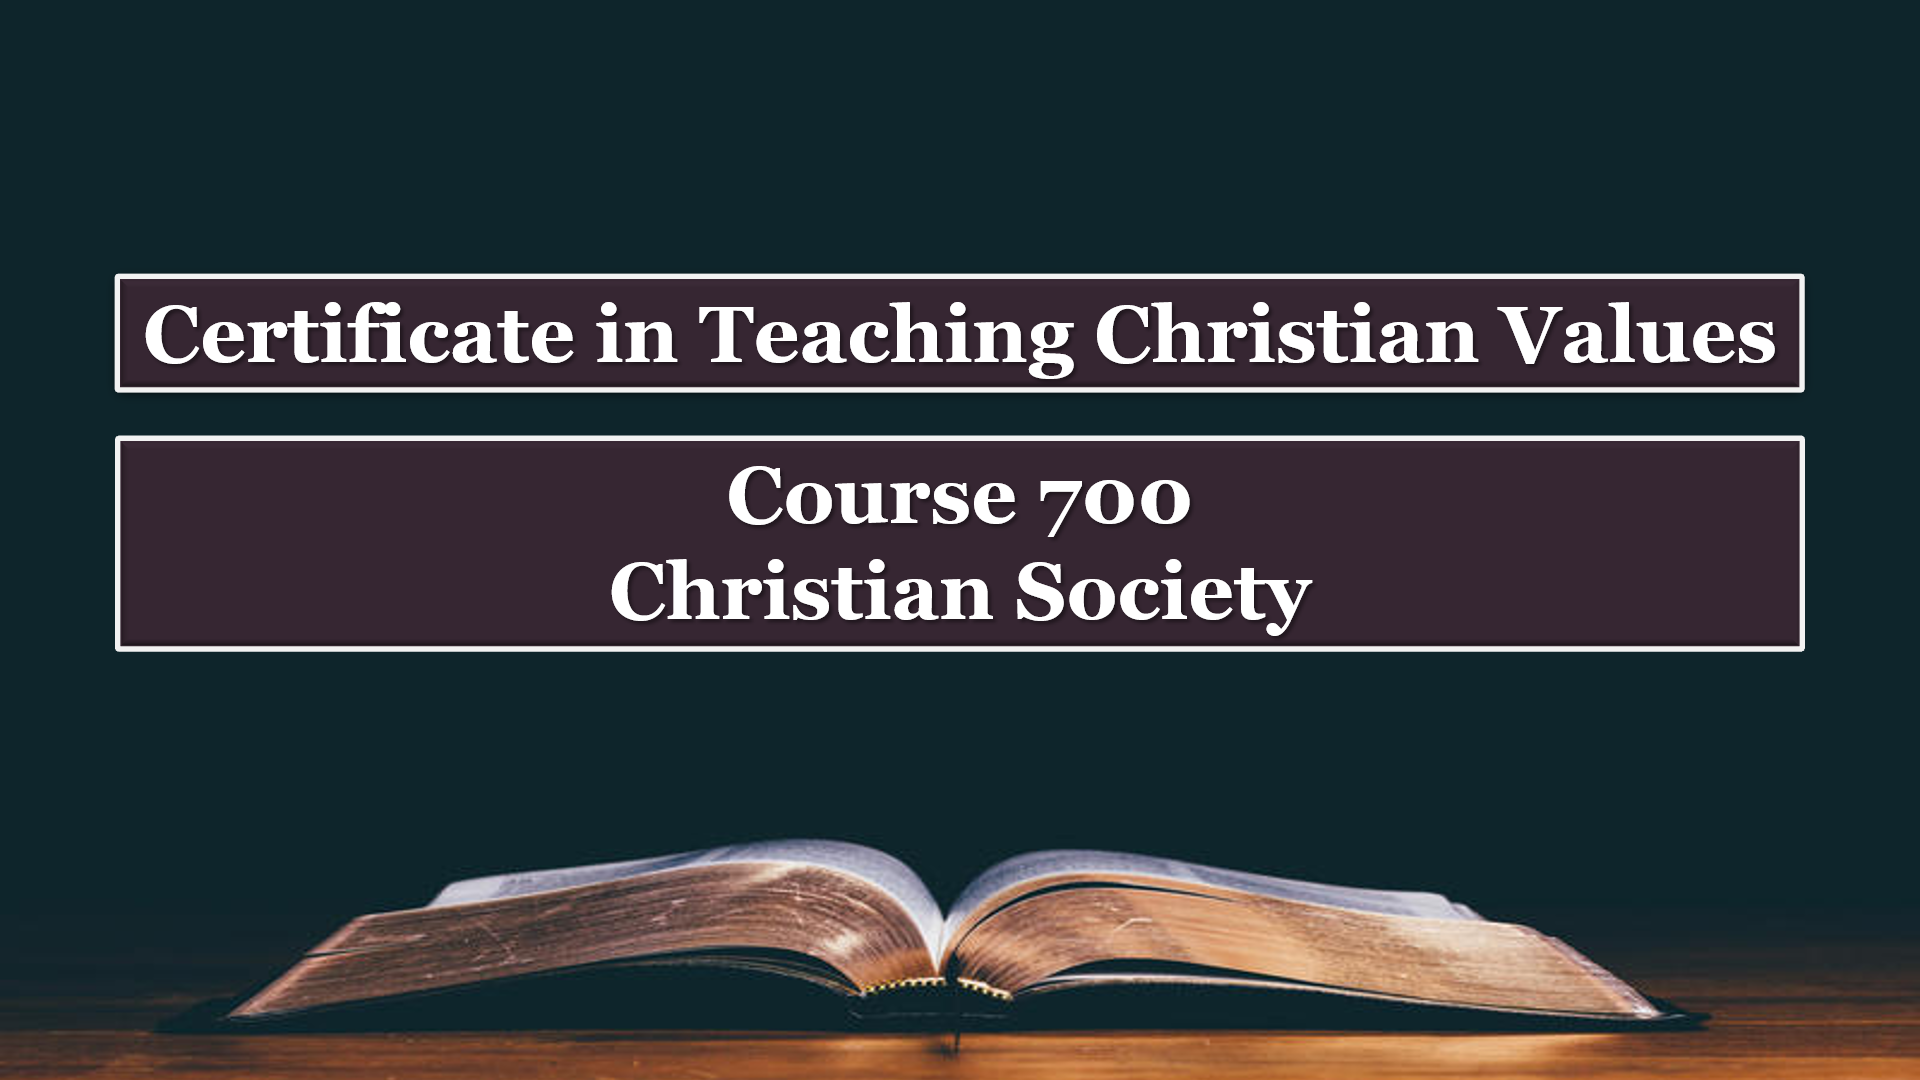 Course 700: Christian Society